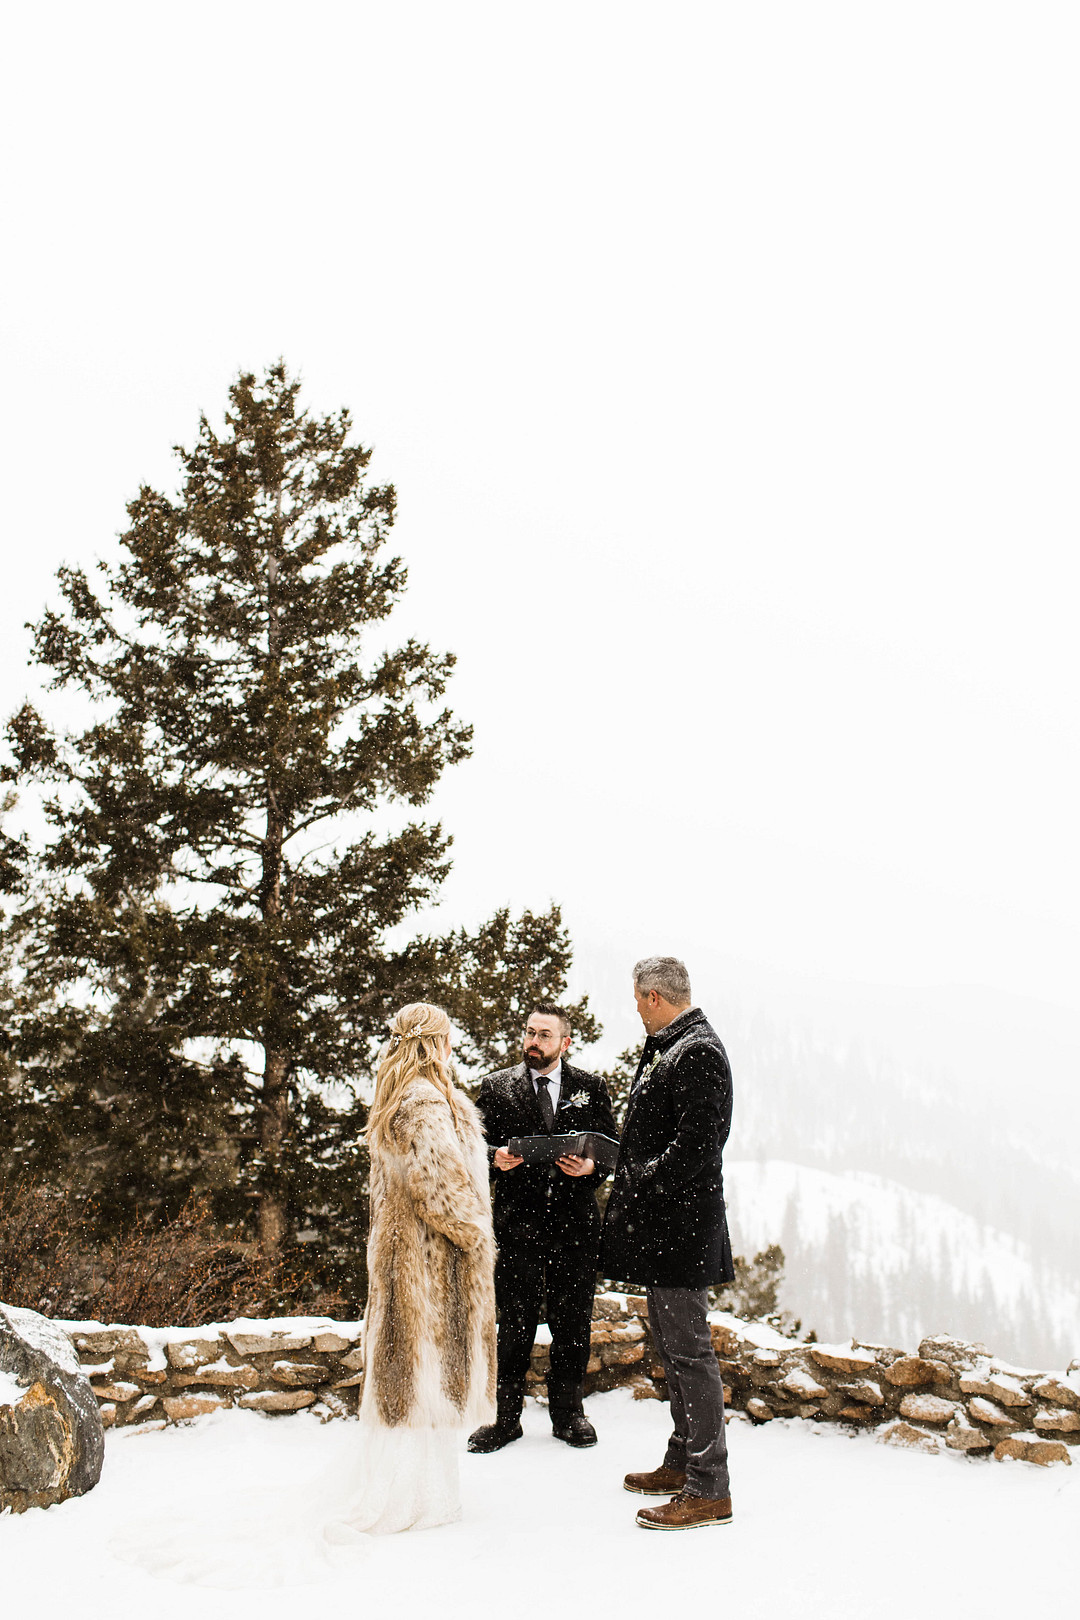 Winter Wonderland Wedding Ceremony